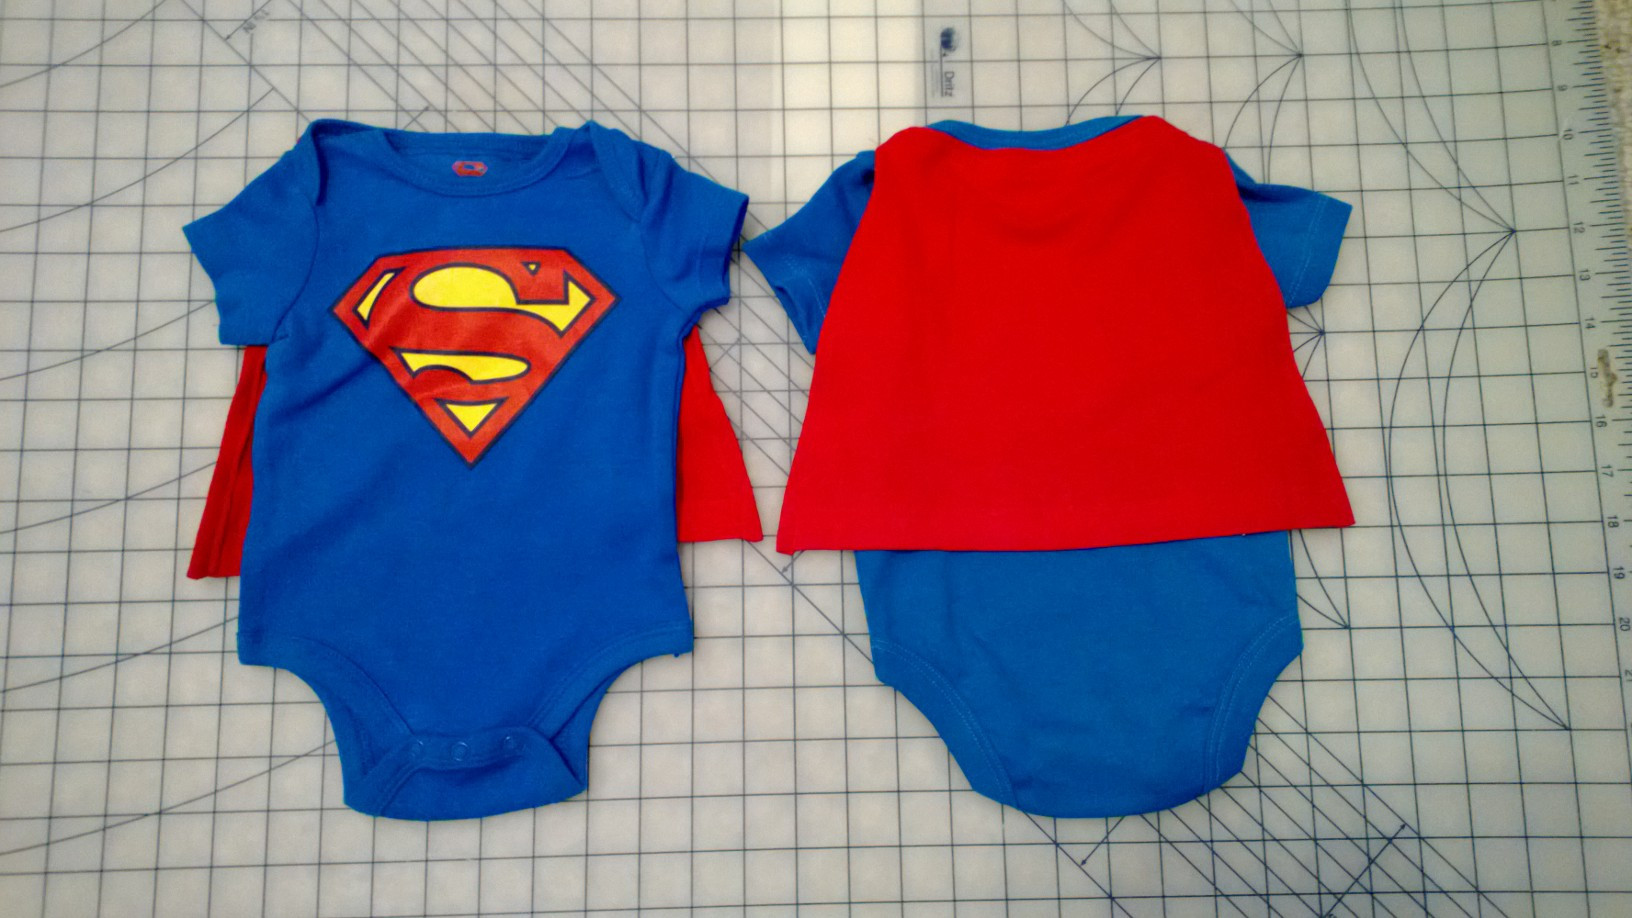 DIY Toddler Cape Pattern
 DIY Baby Superhero Cape